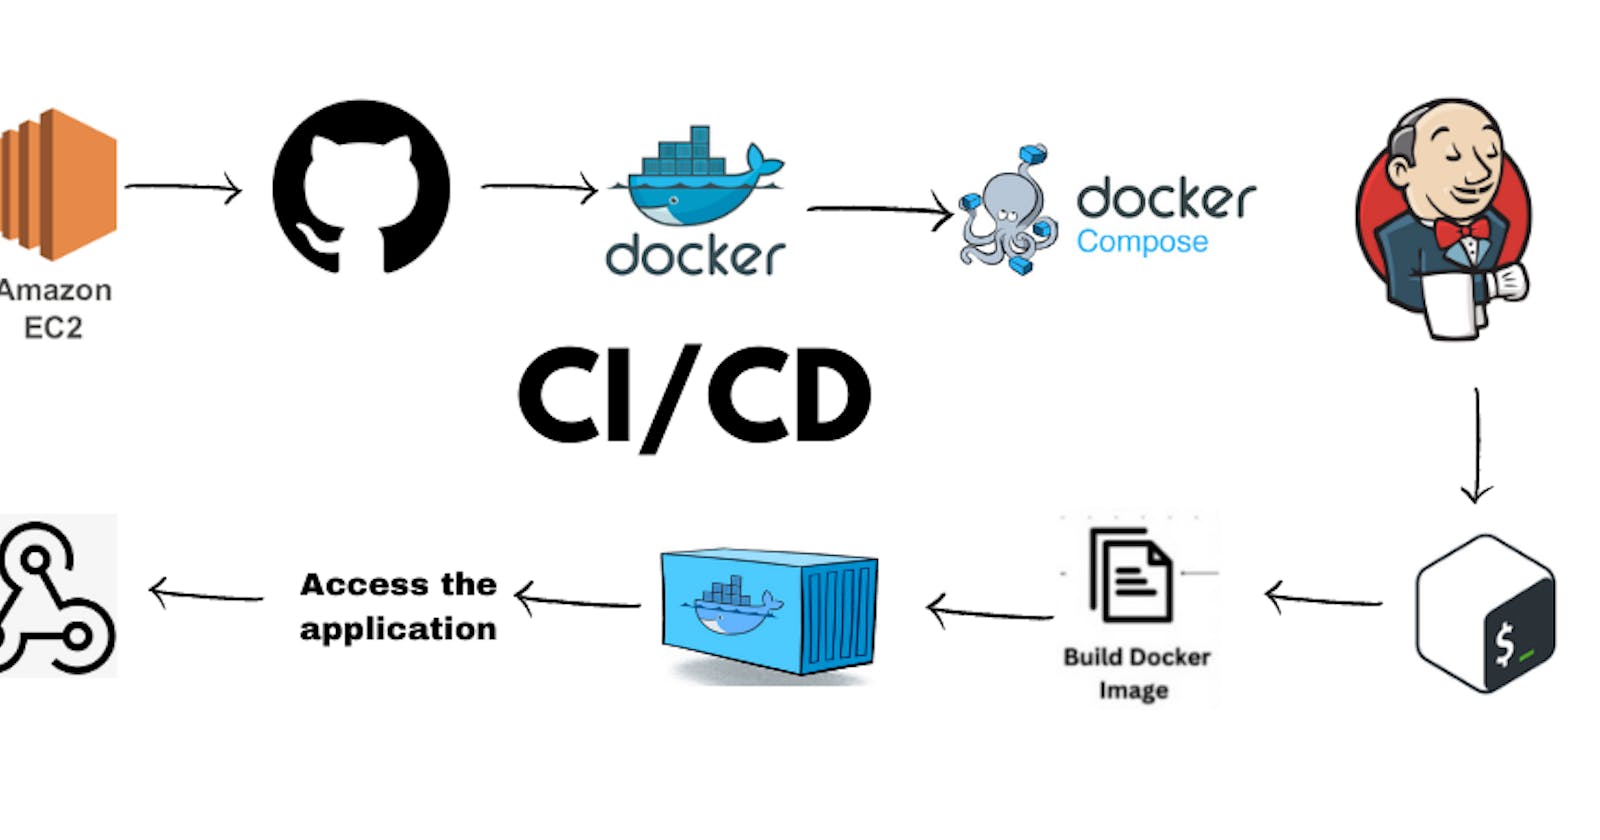 Jenkins CI/CD Pipeline to deploy a Dockerized Node App on AWS